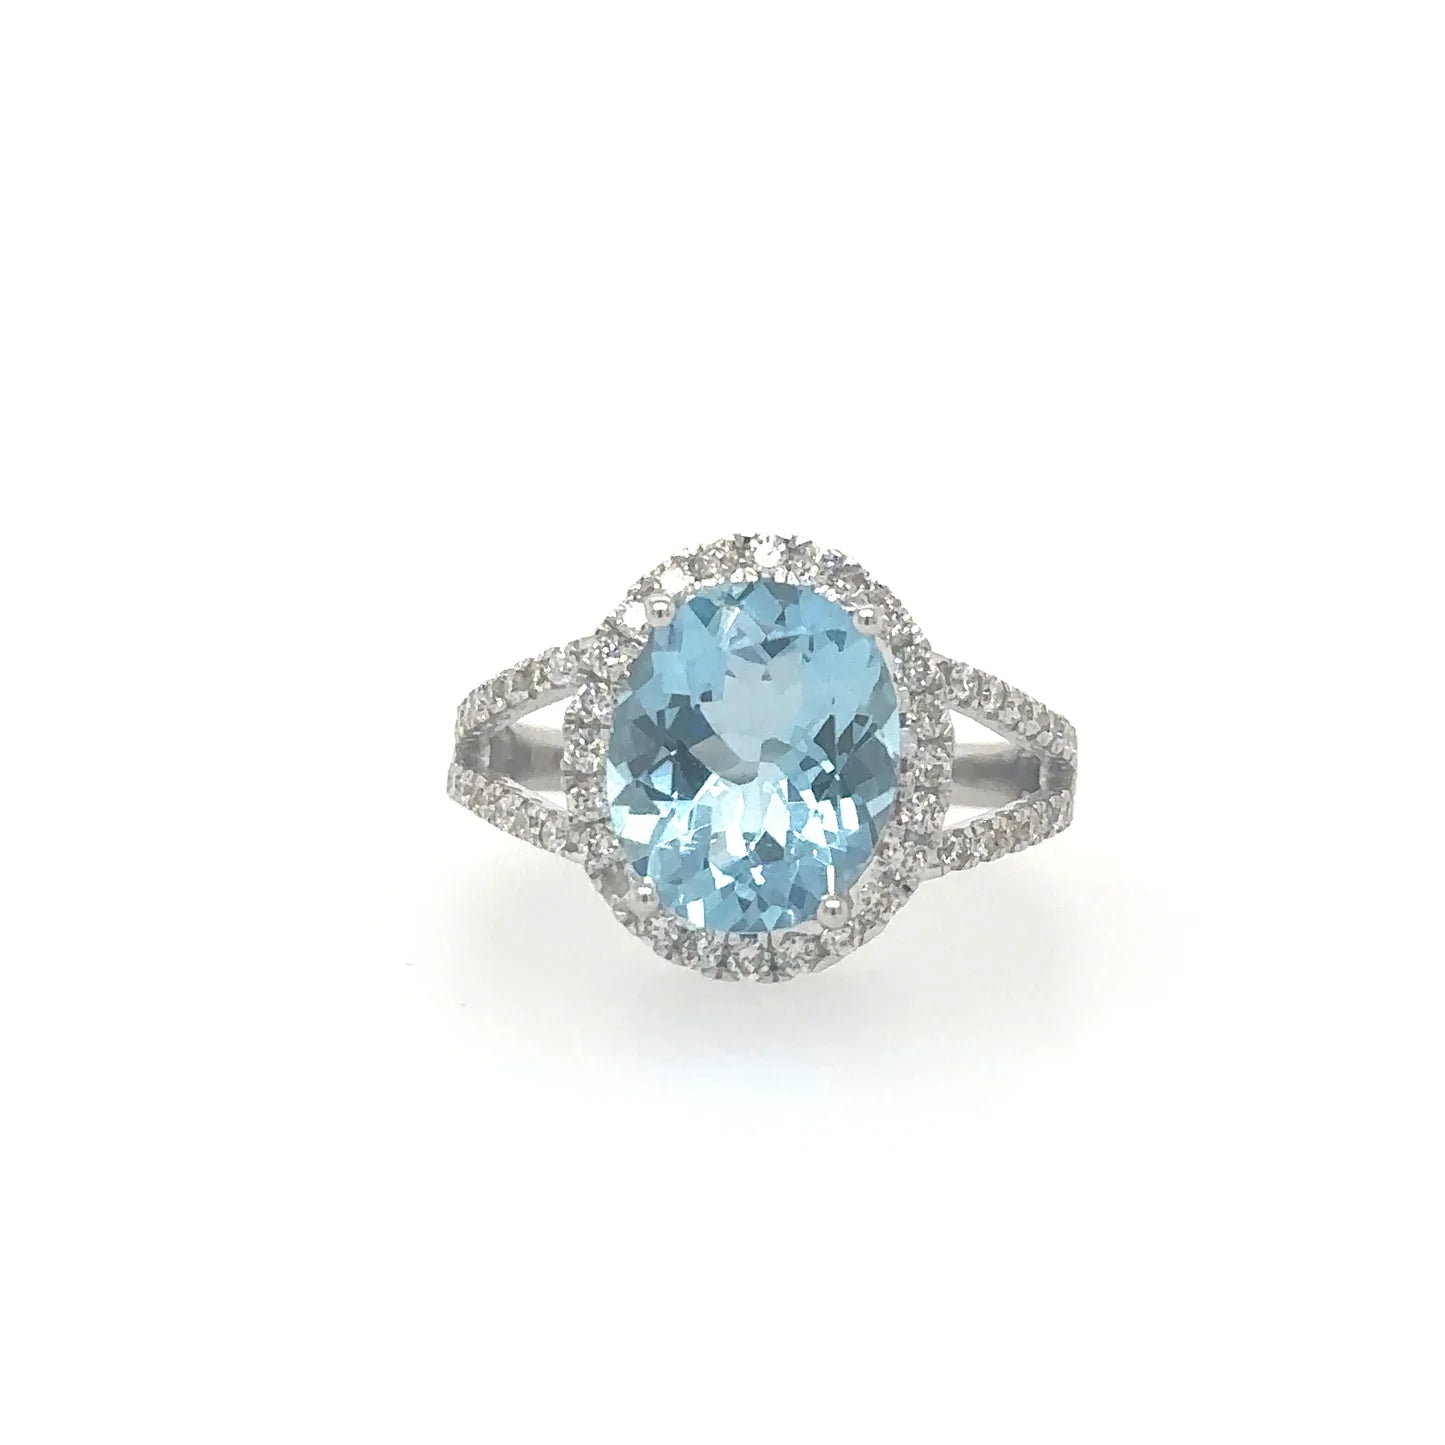 Oval Shape Aquamarine Ring With Diamonds